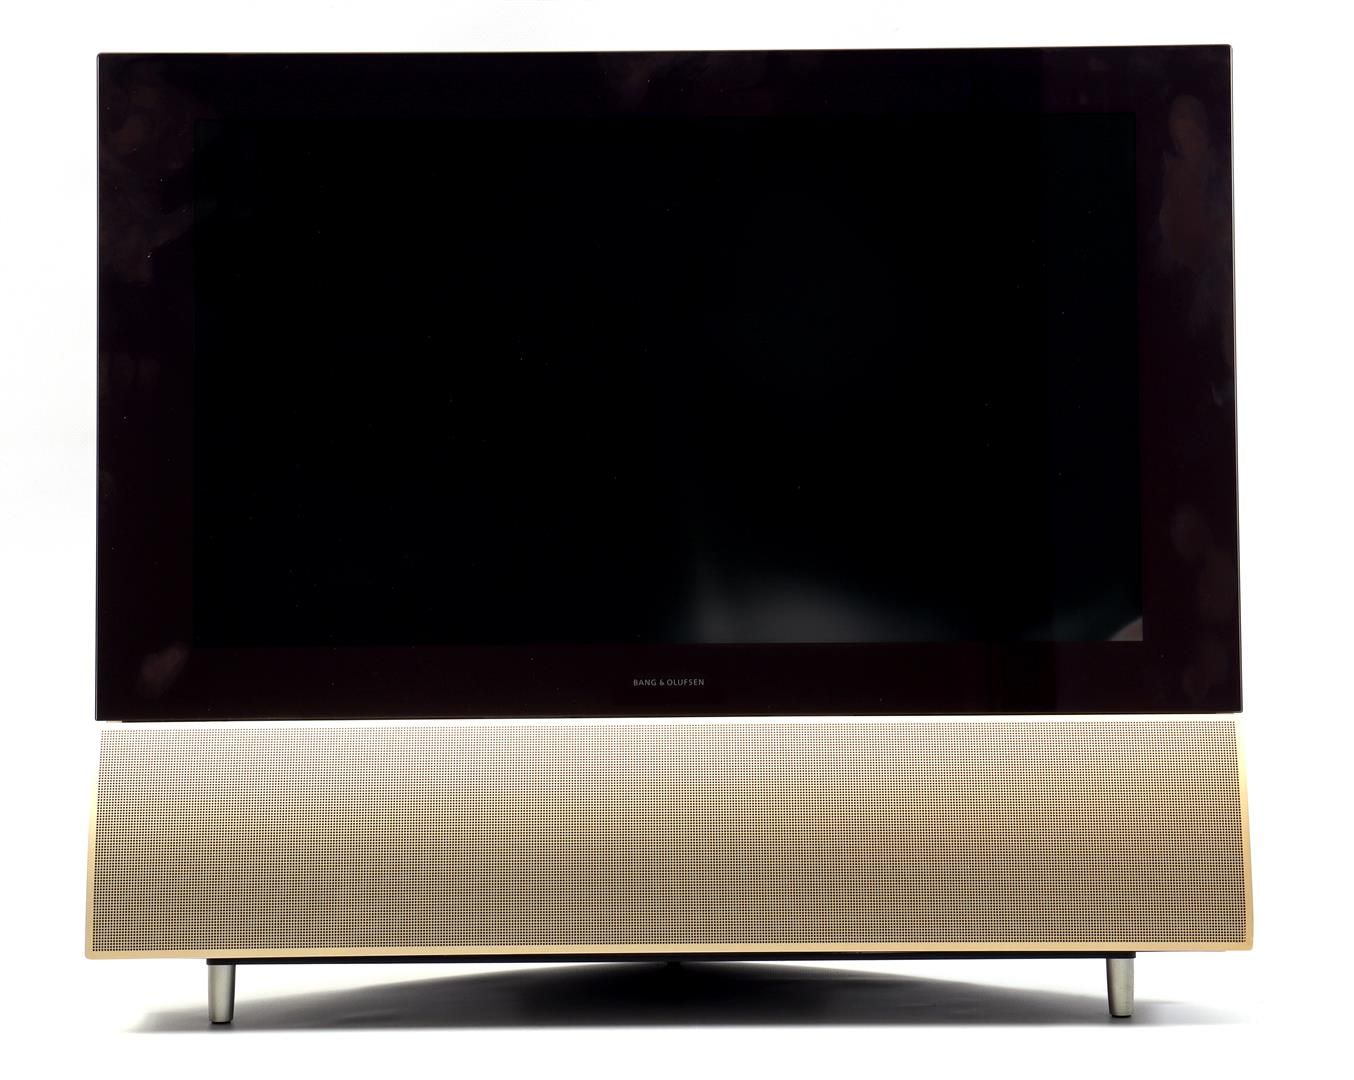 BANG & OLUFSEN 极简主义风格的Bang & Olufsen BeoCenter 6-23电视，型号9212，屏幕58厘米，外部尺寸78厘米